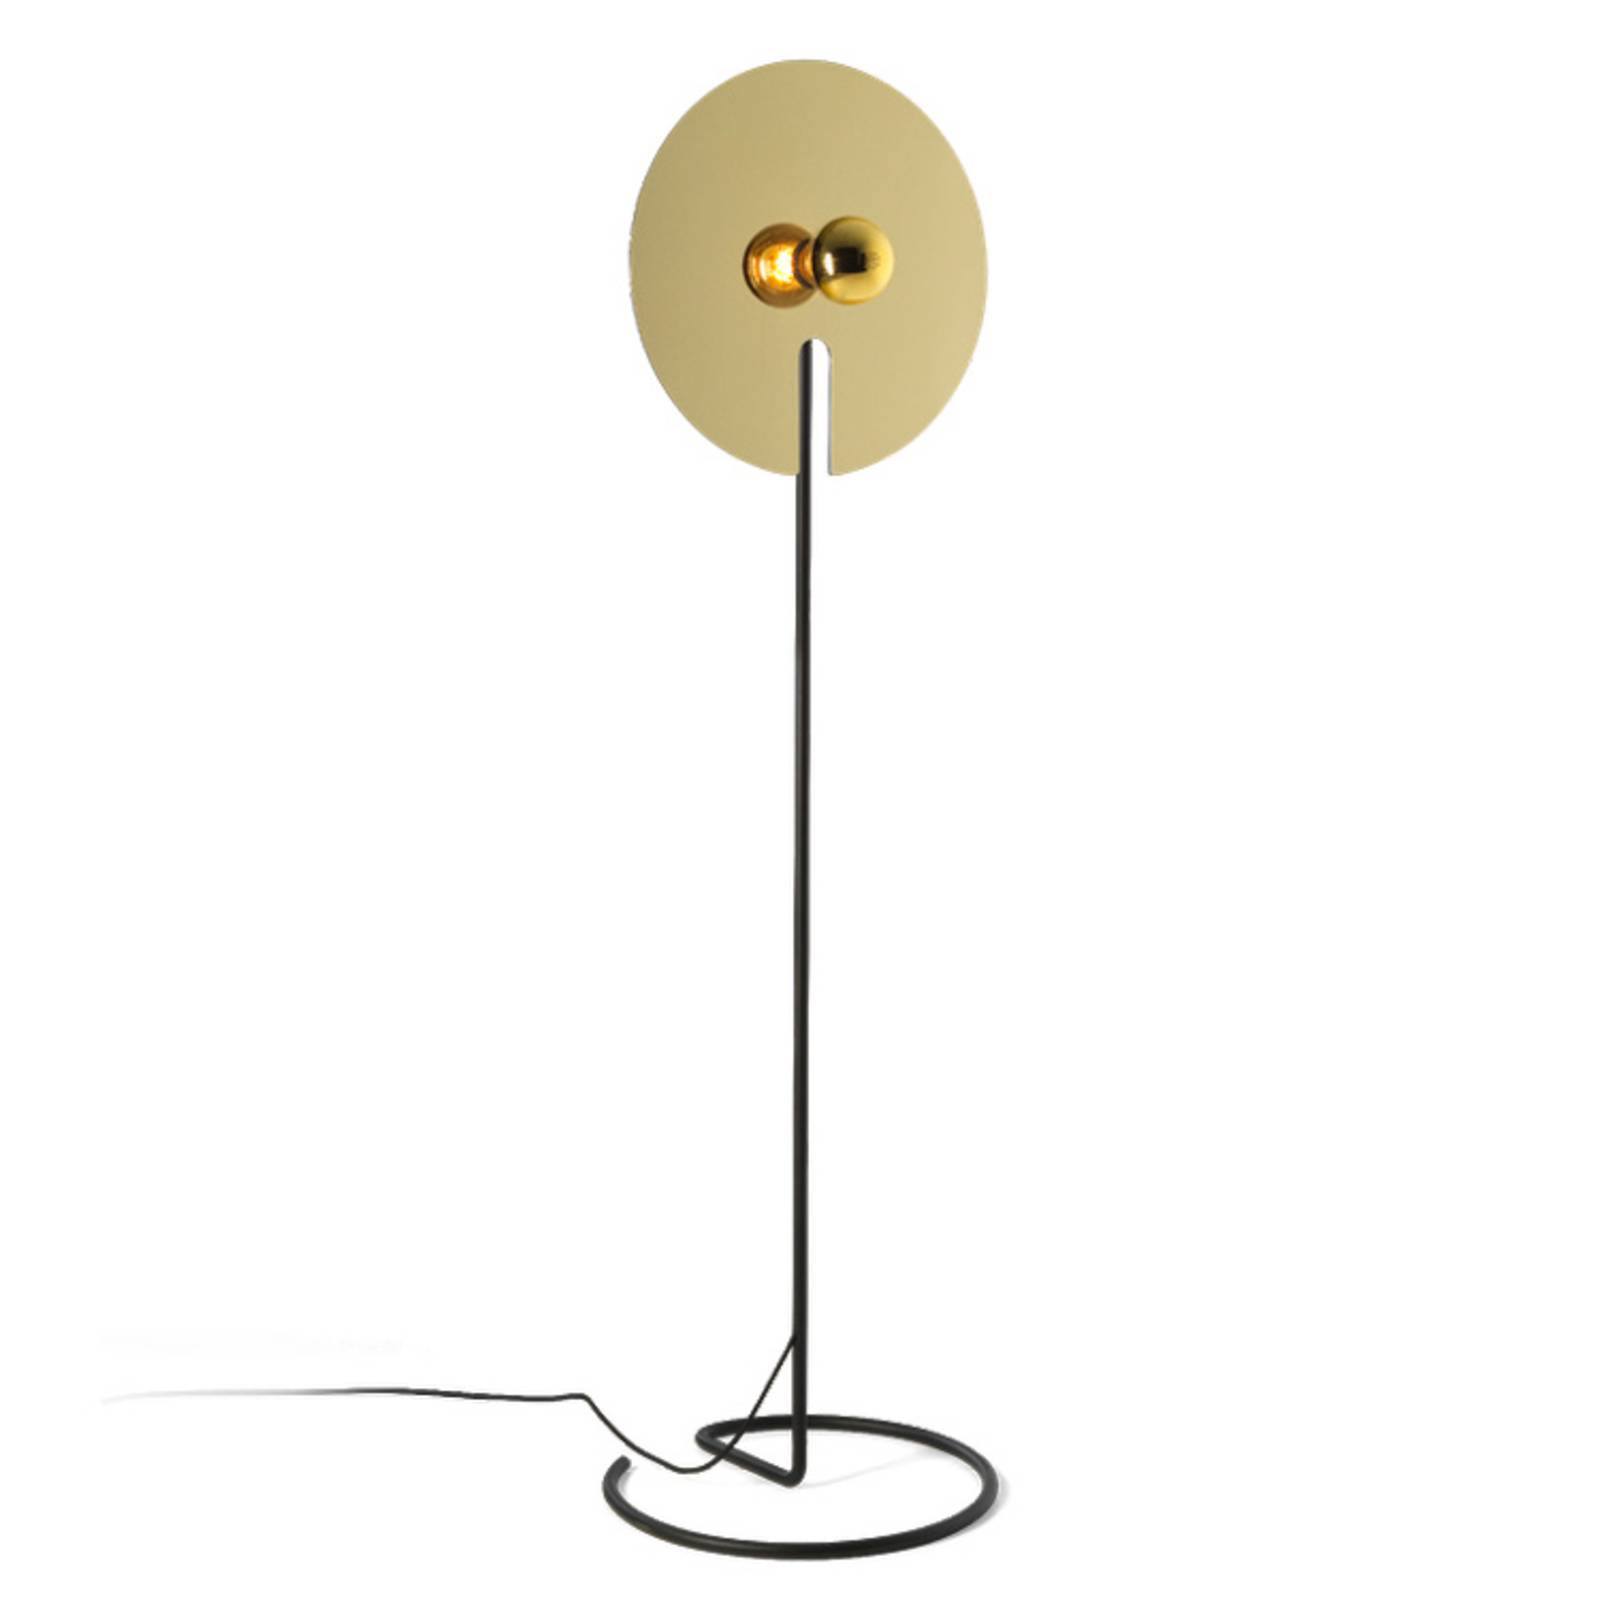 WEVER & DUCRÉ Mirro Stehlampe 2.0 schwarz/gold von Wever & Ducré Lighting